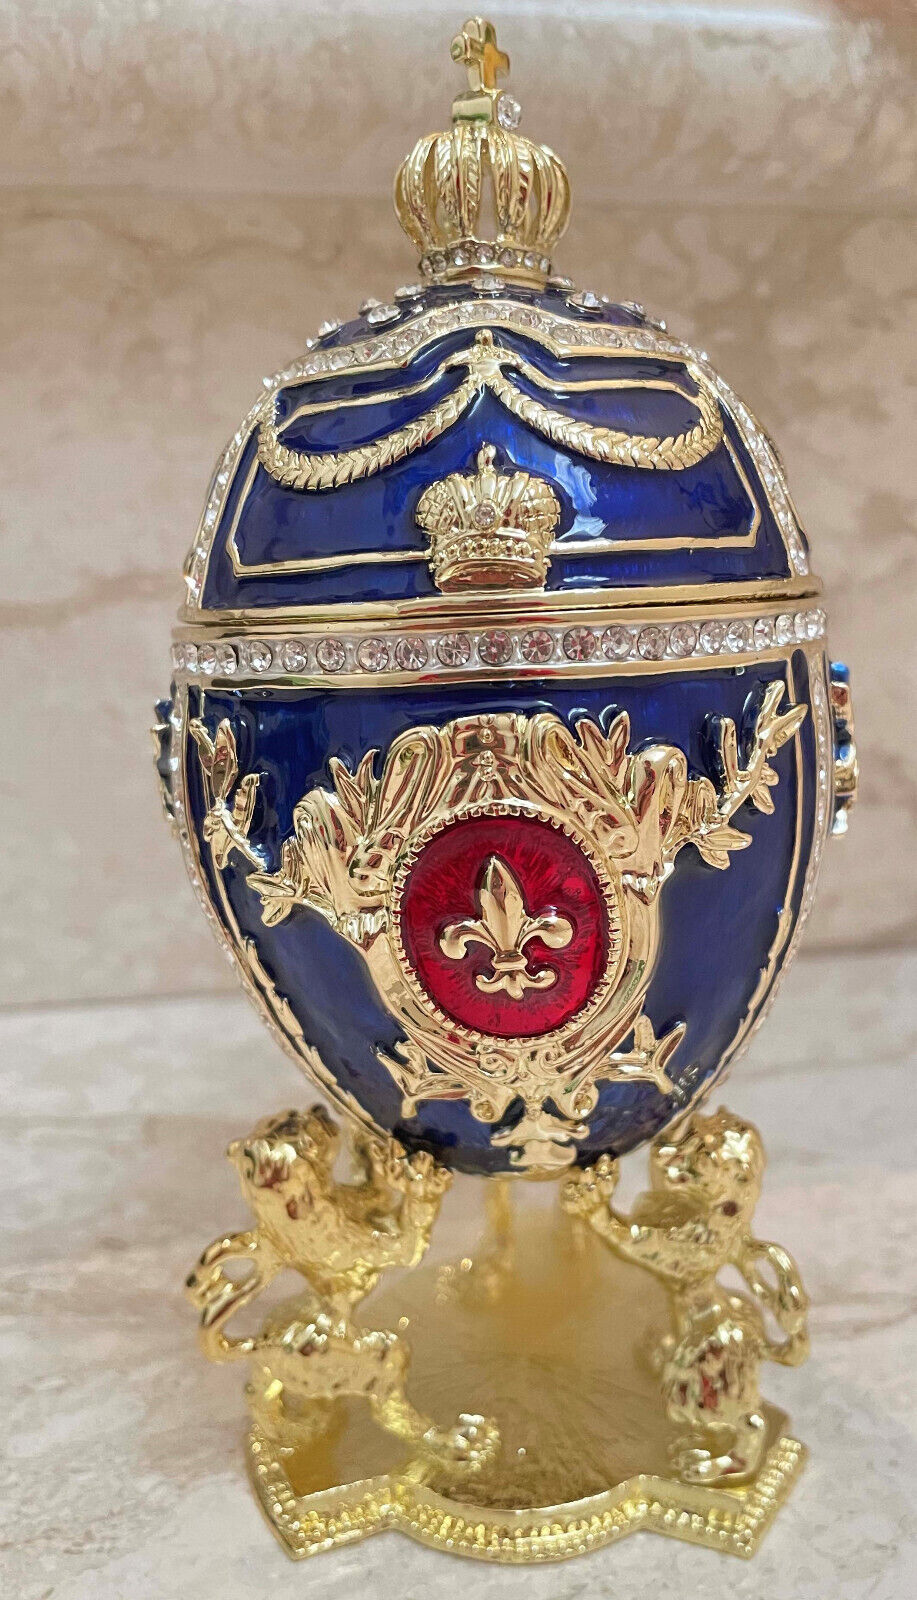 Designer Fabergé Easter Egg Faberge Eggs Imperial Royal Handmade 24k GOLD Swarov